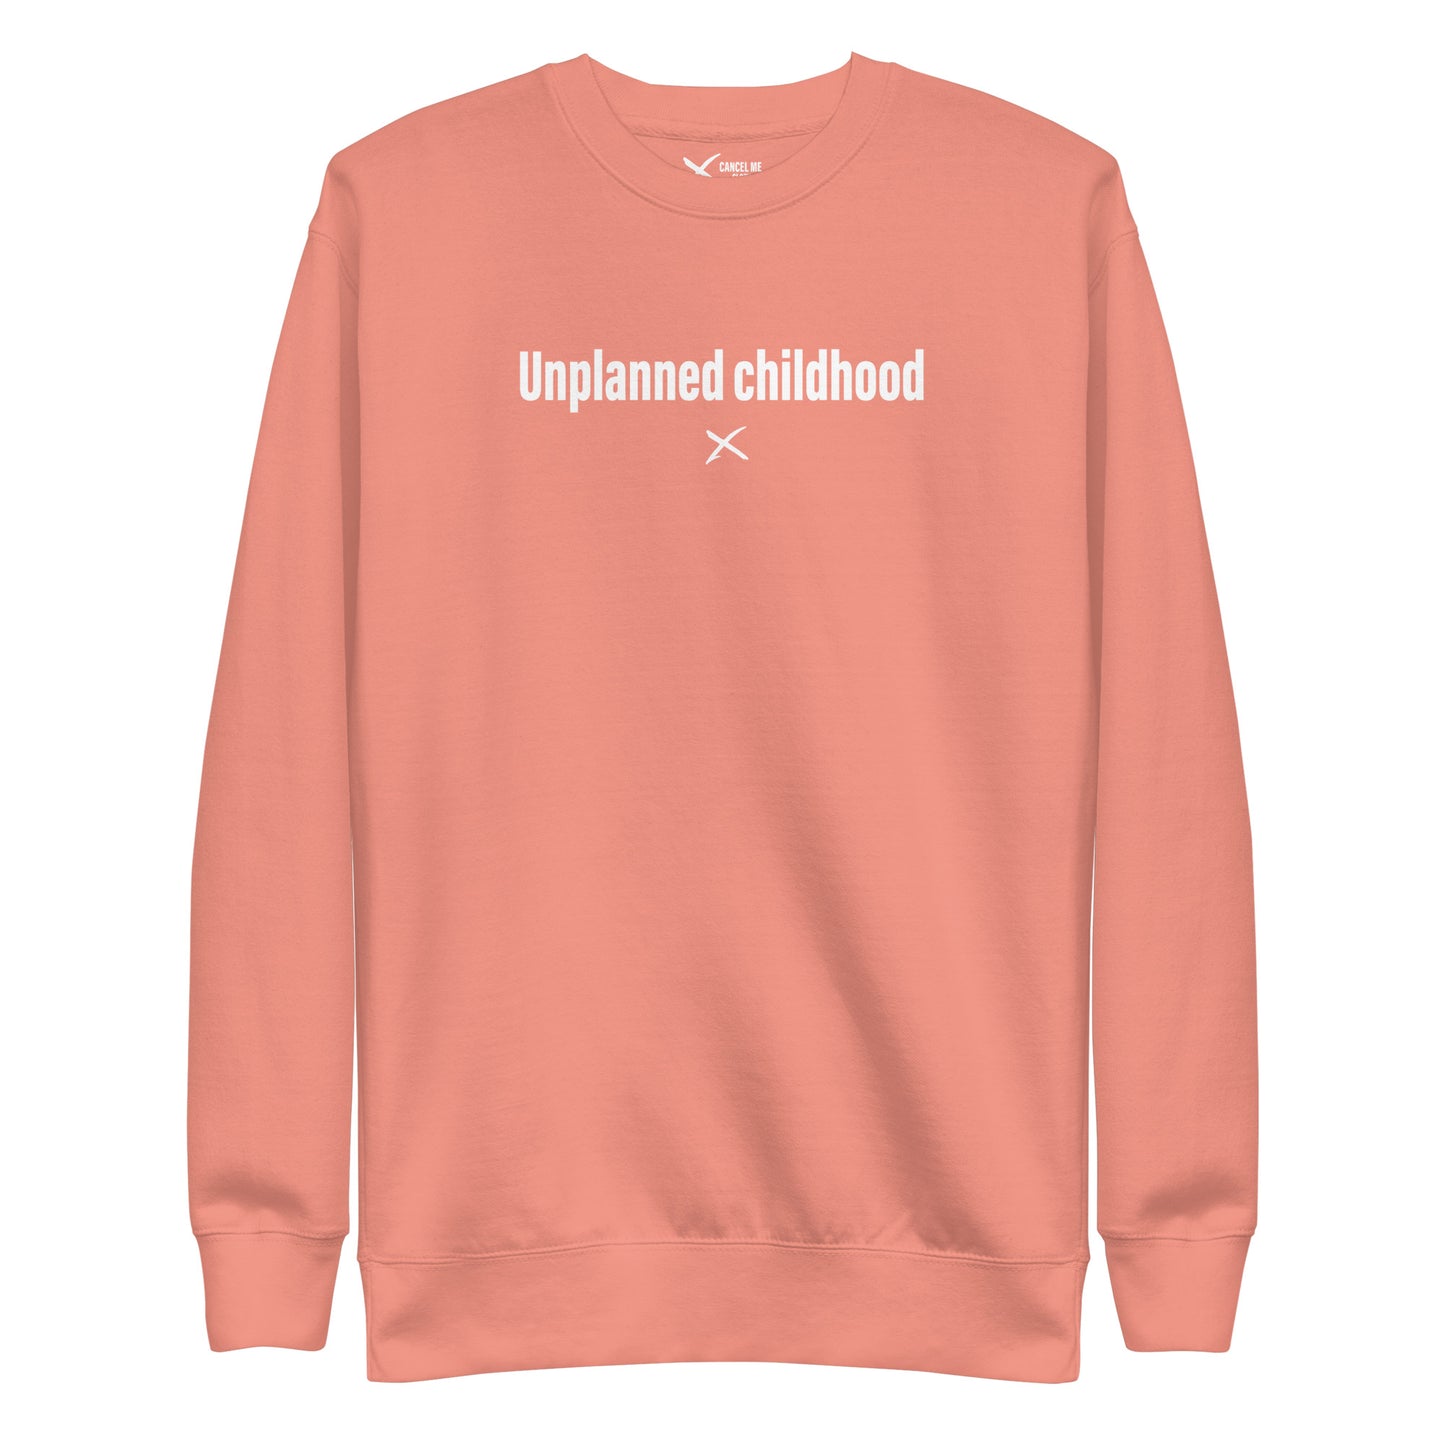 Unplanned childhood - Sweatshirt